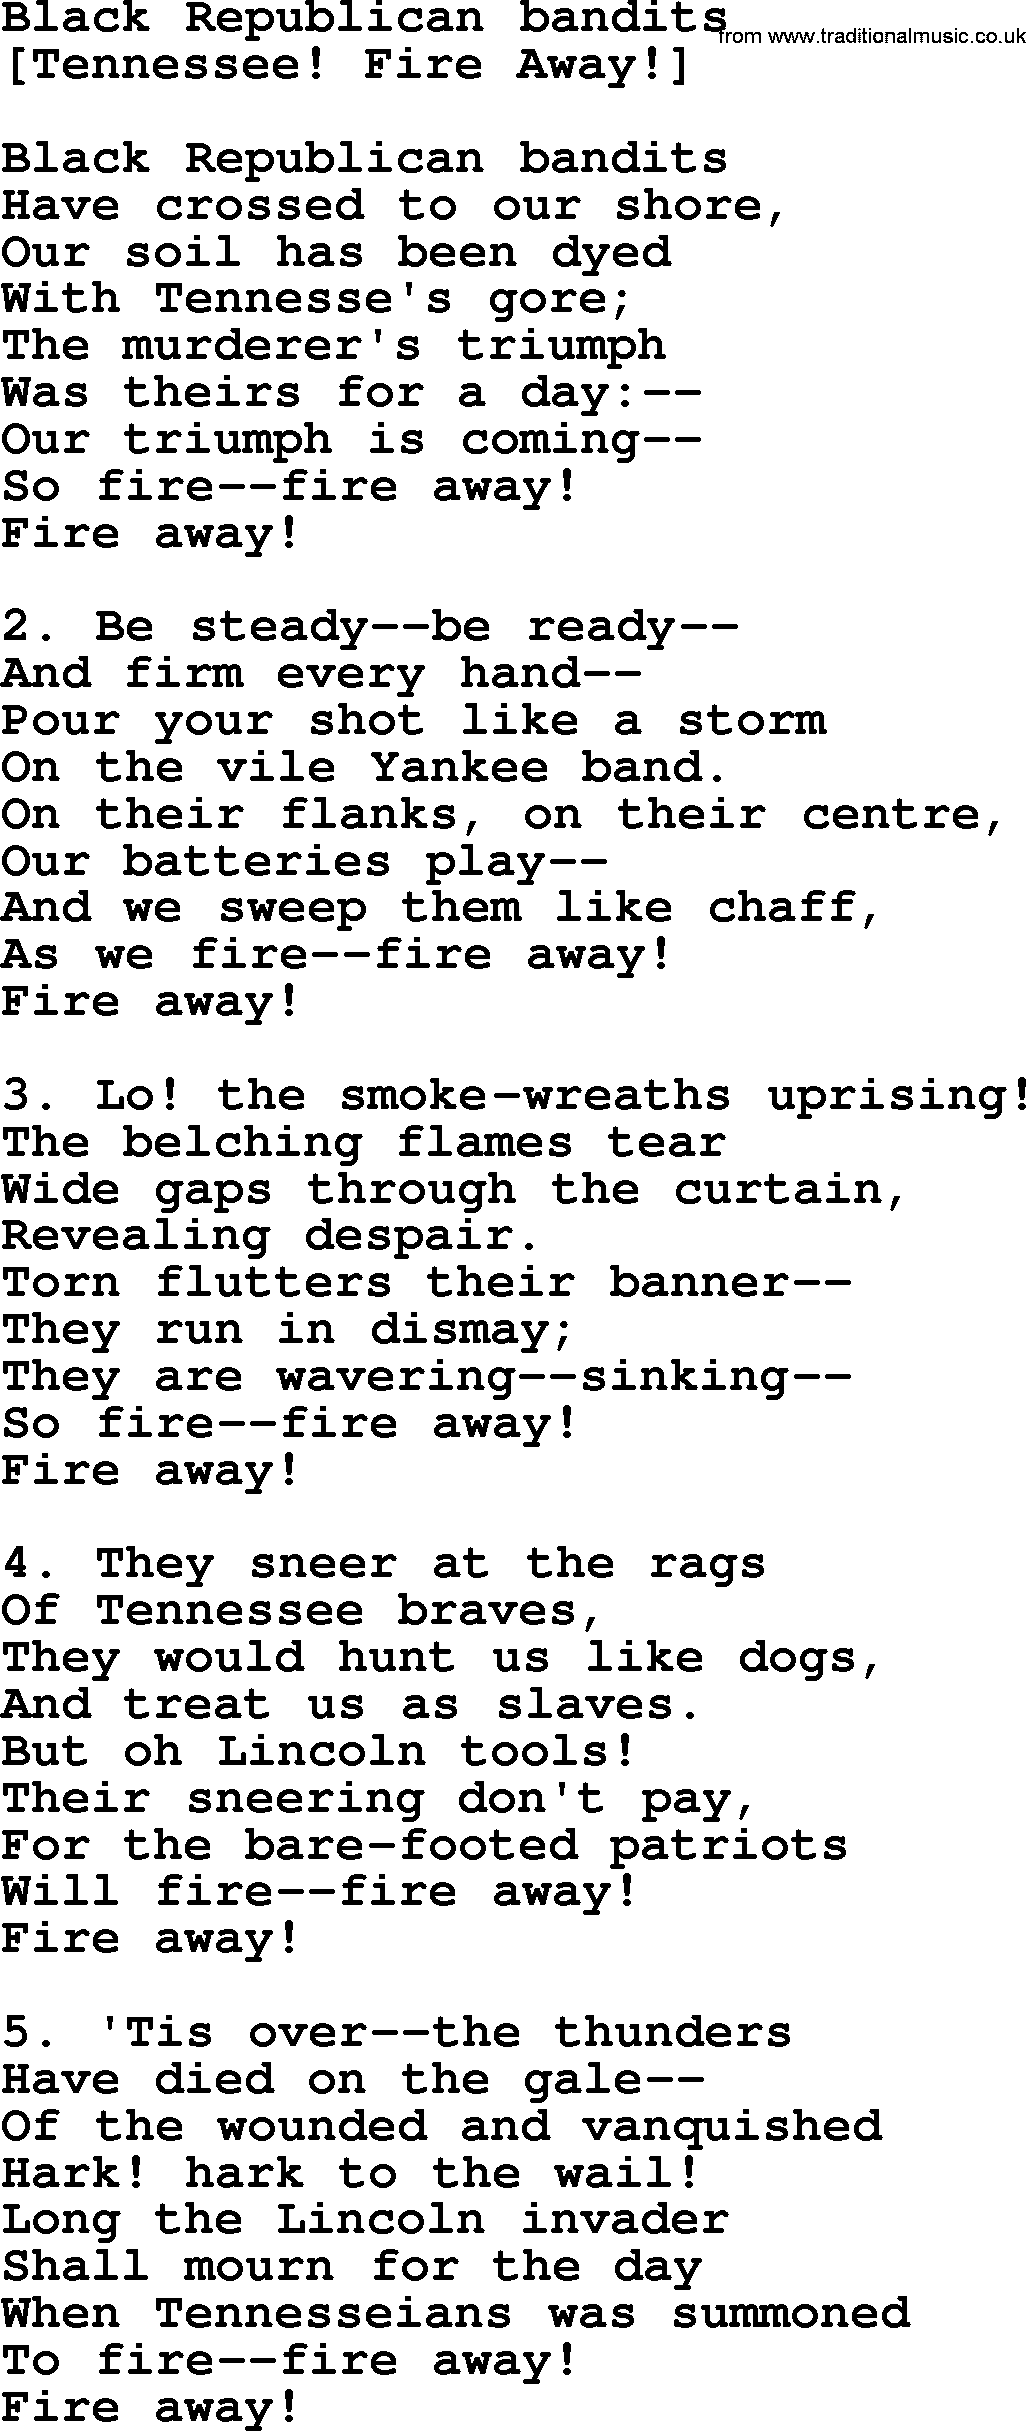 Old American Song: Black Republican Bandits, lyrics